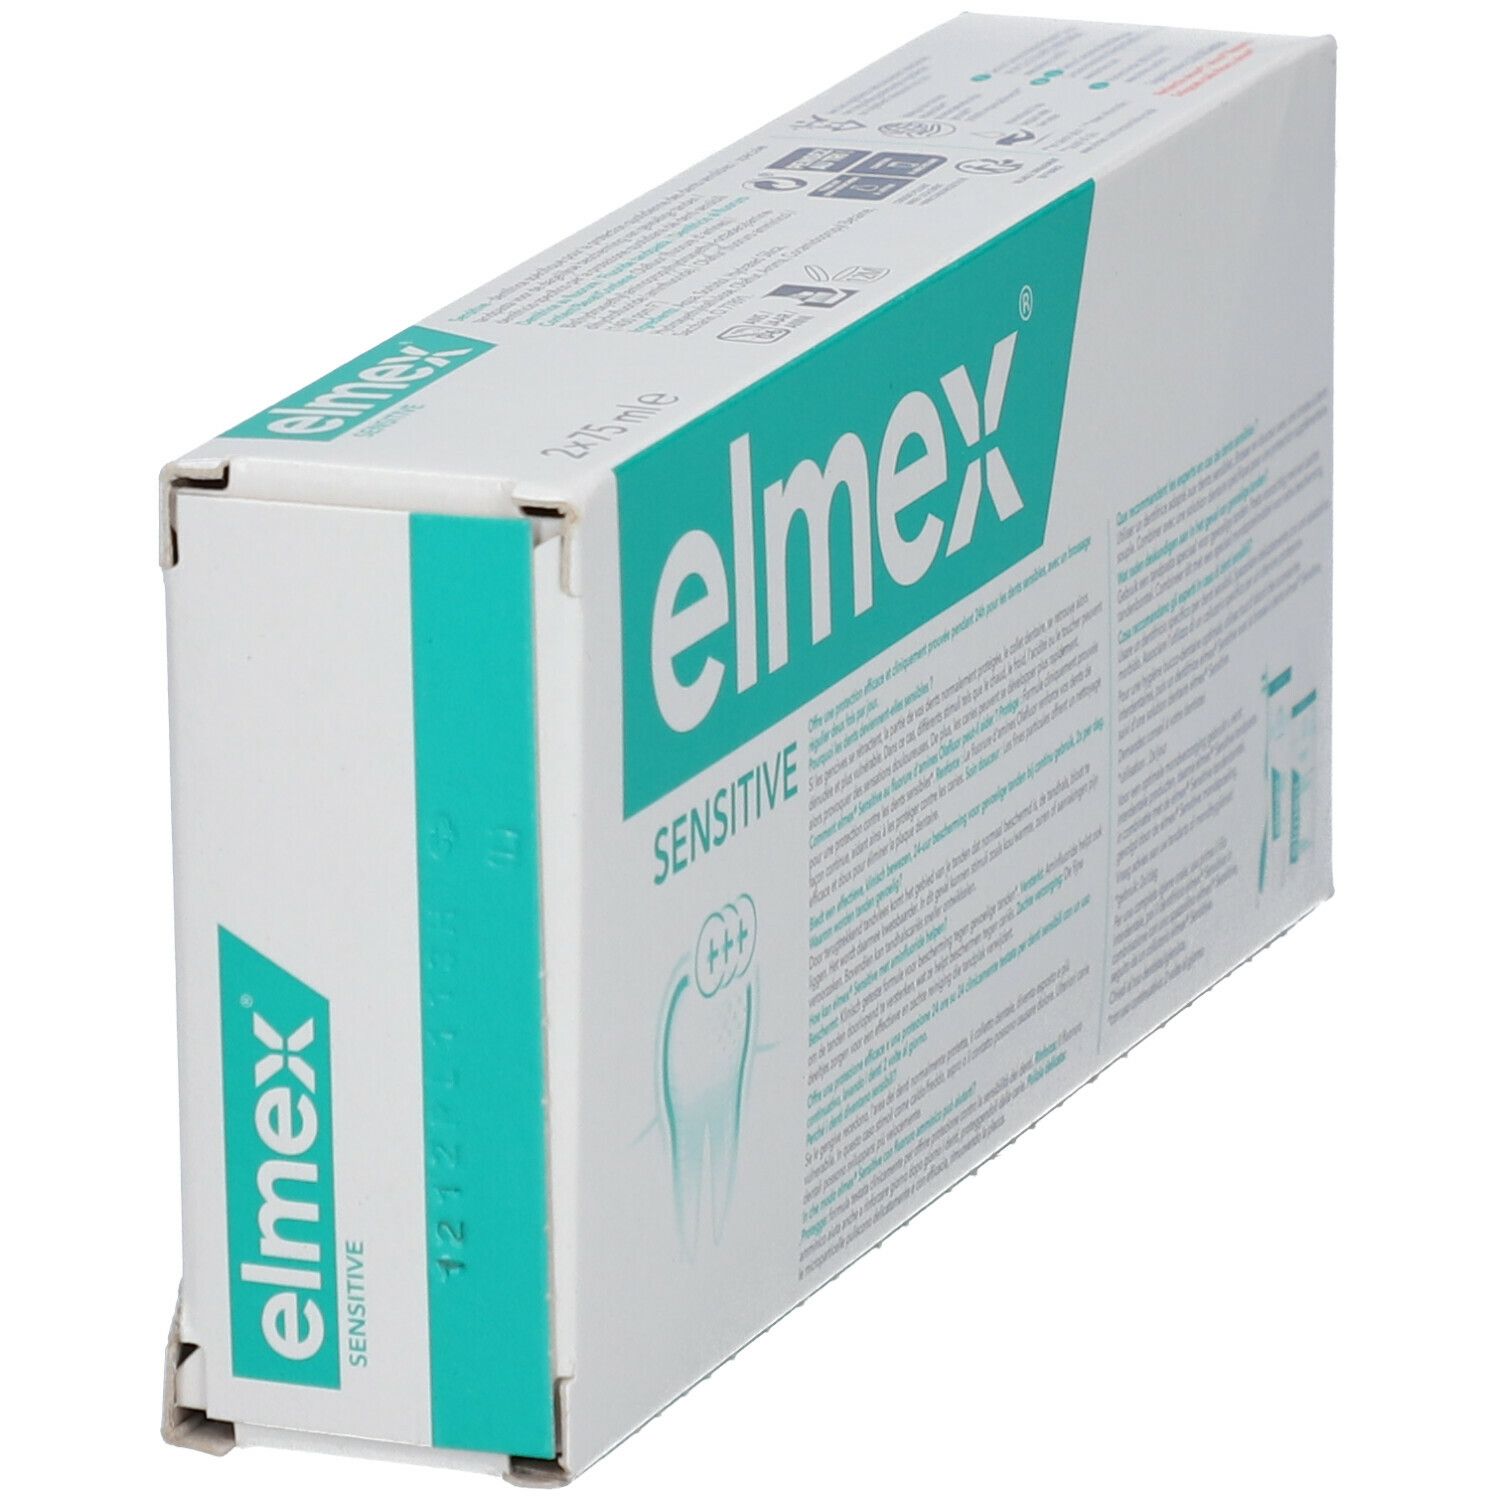 elmex® Sensitive dentifrice